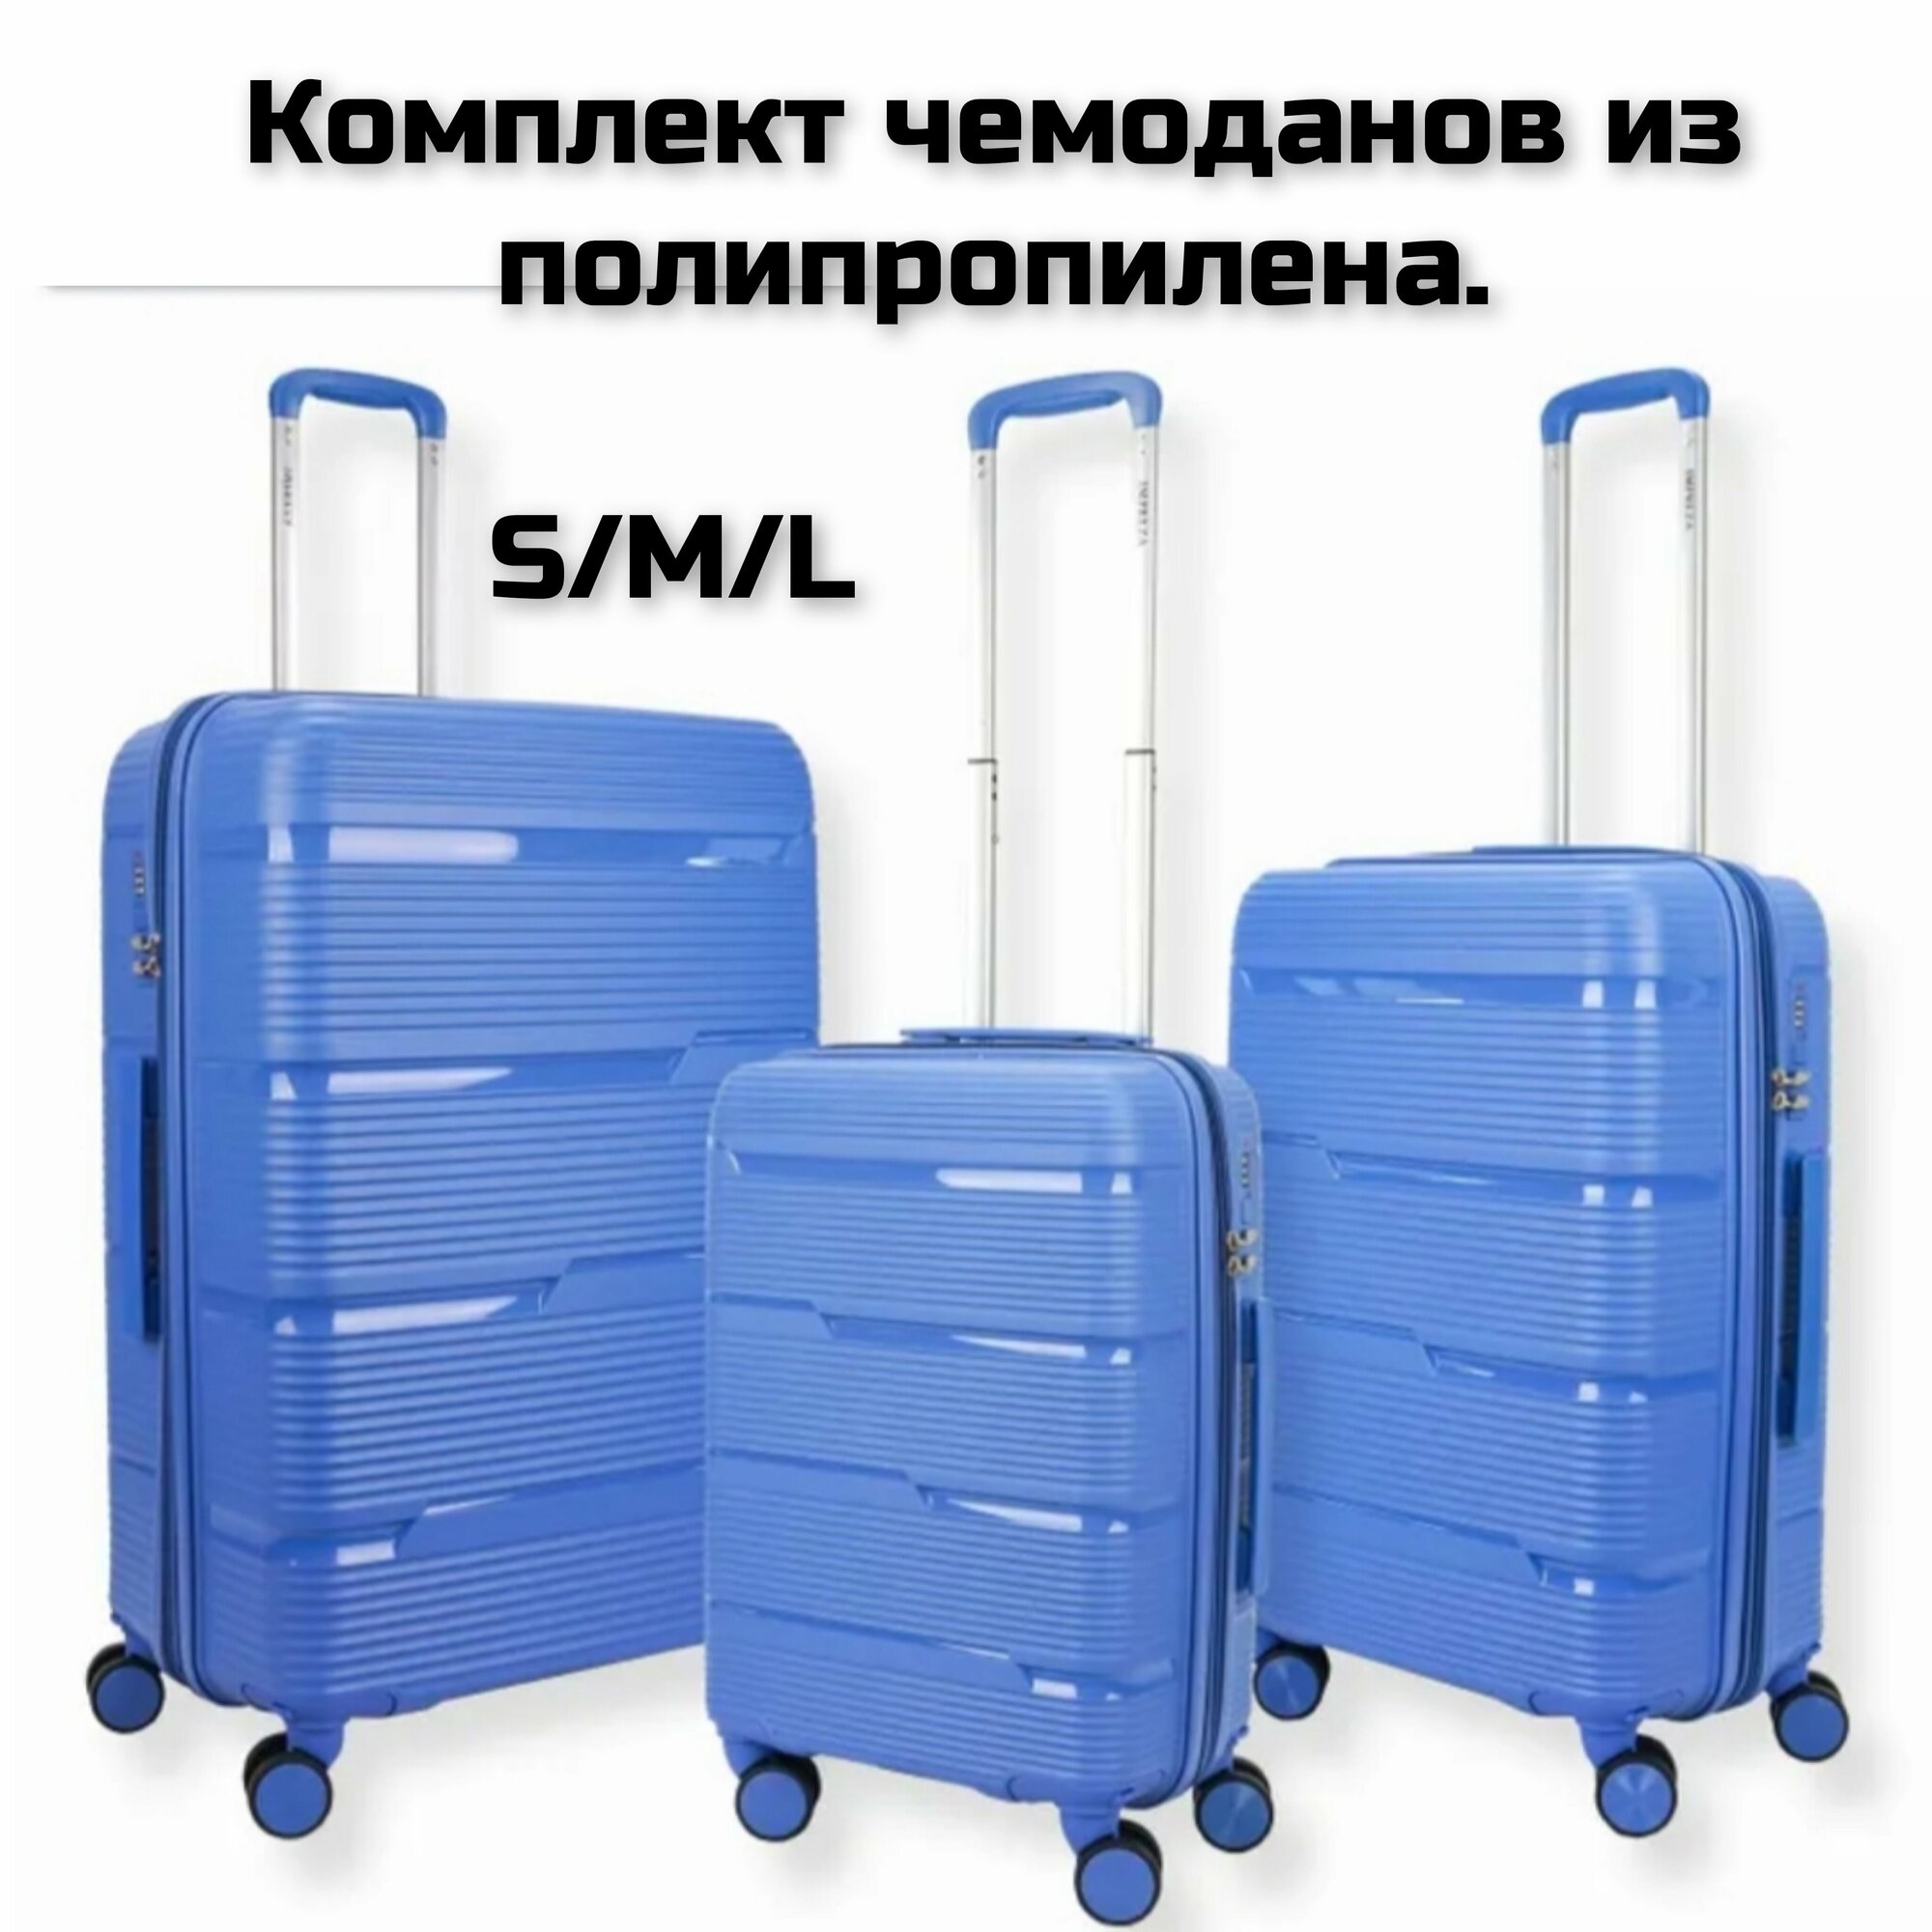 Комплект чемоданов Impreza чемодан синий 